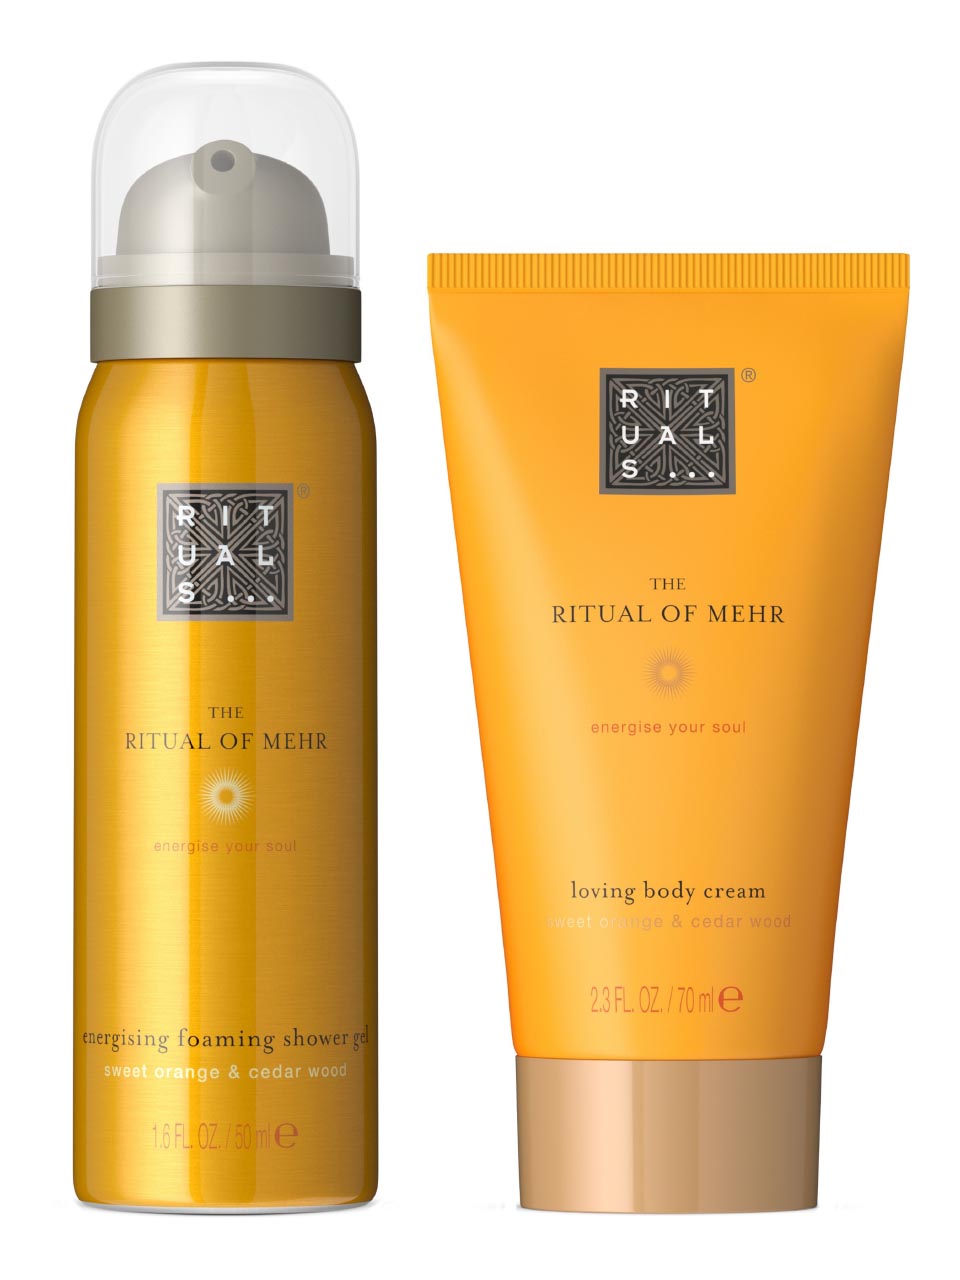 Rituals Mehr Body Care Set/Body Cream 70 ml + Foaming Shower Gel 50 ml